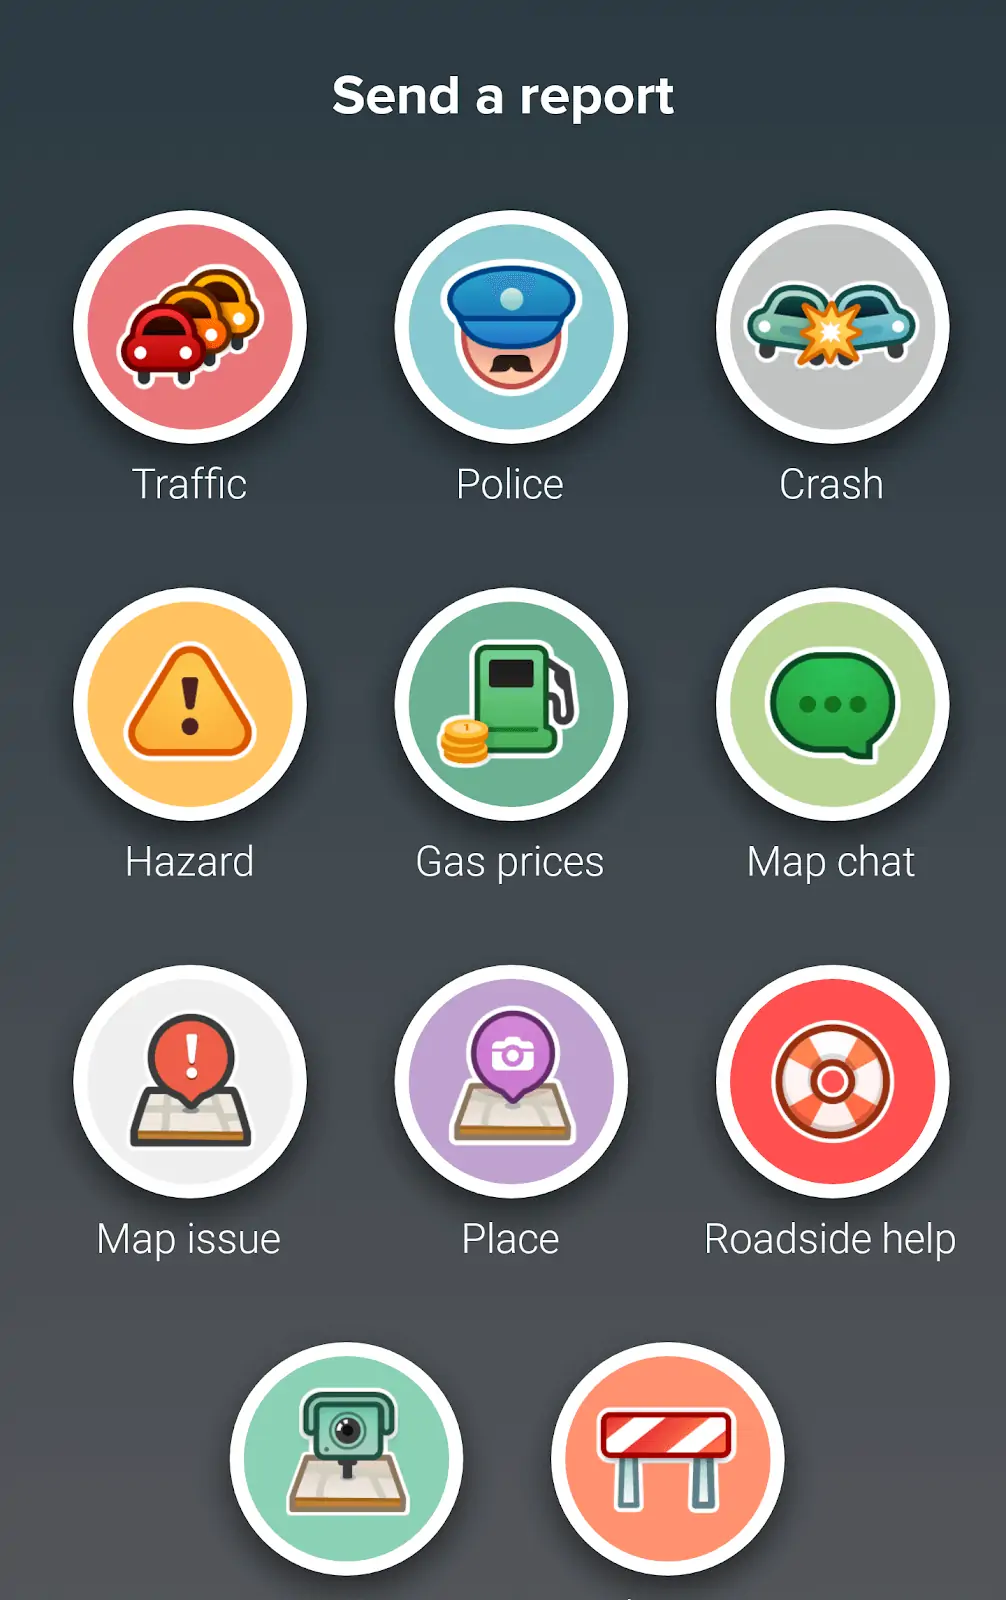 How to use Waze: Send a report